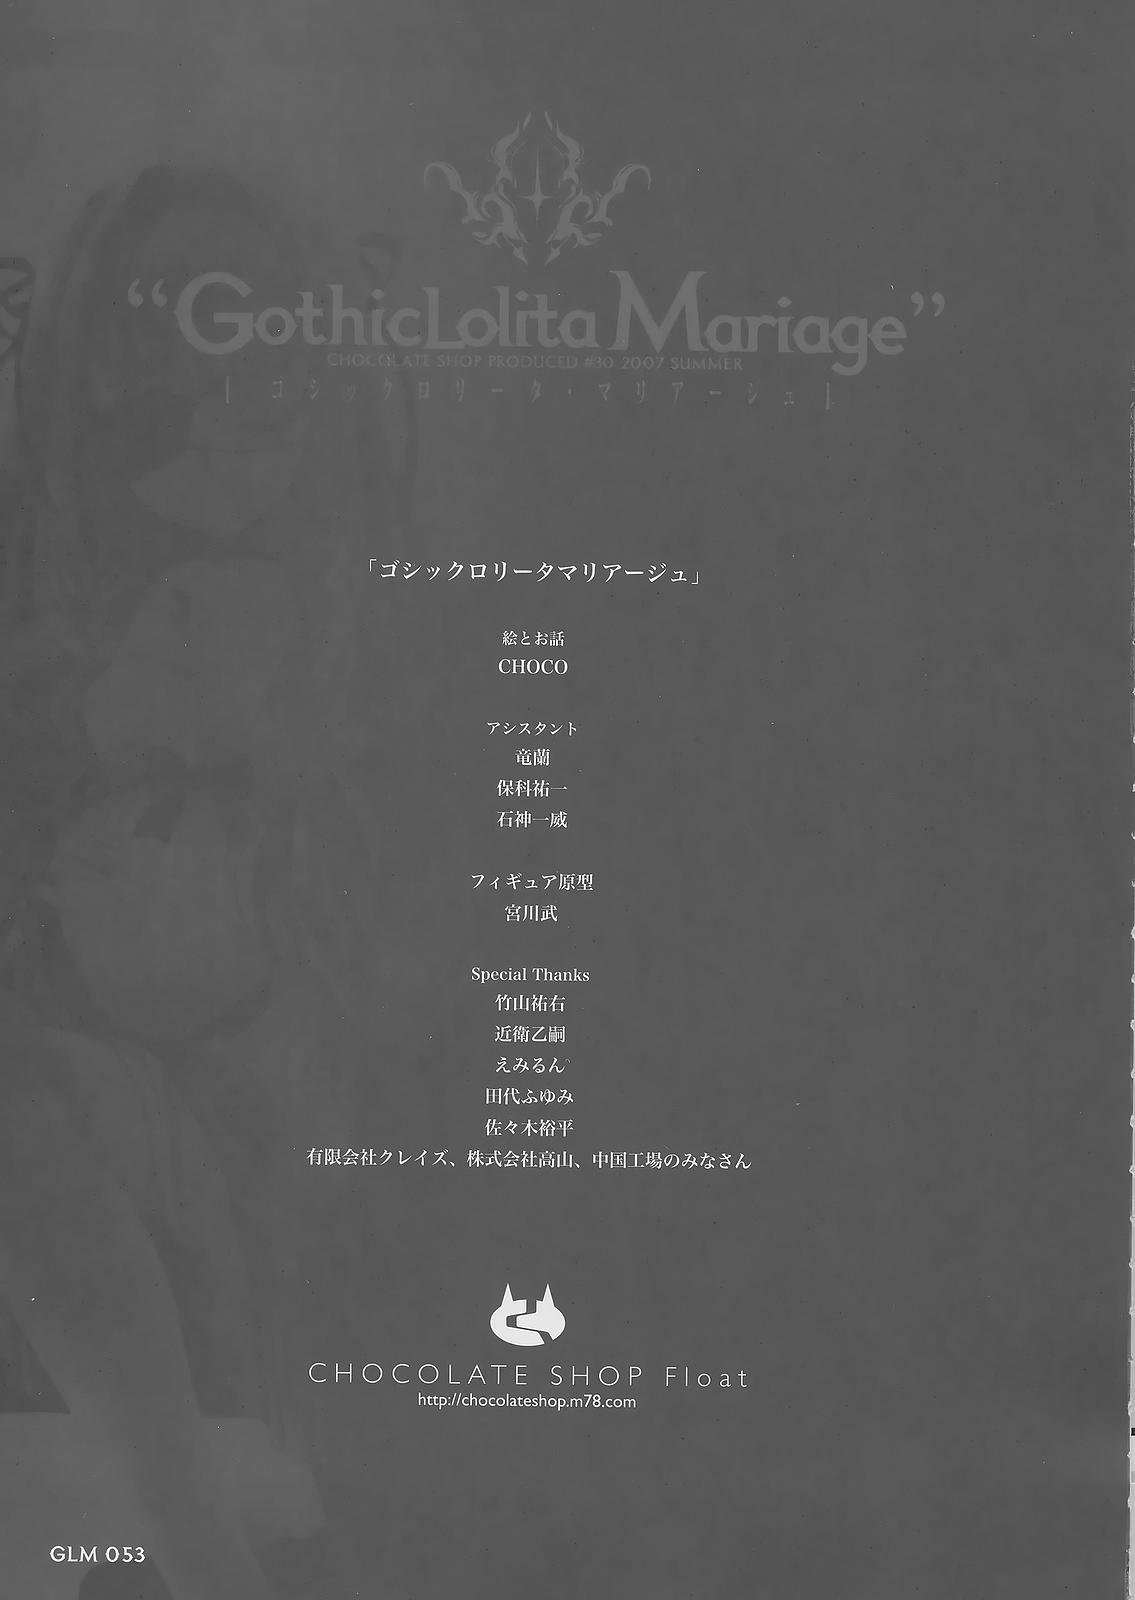 Gothic lolita Mariage 51